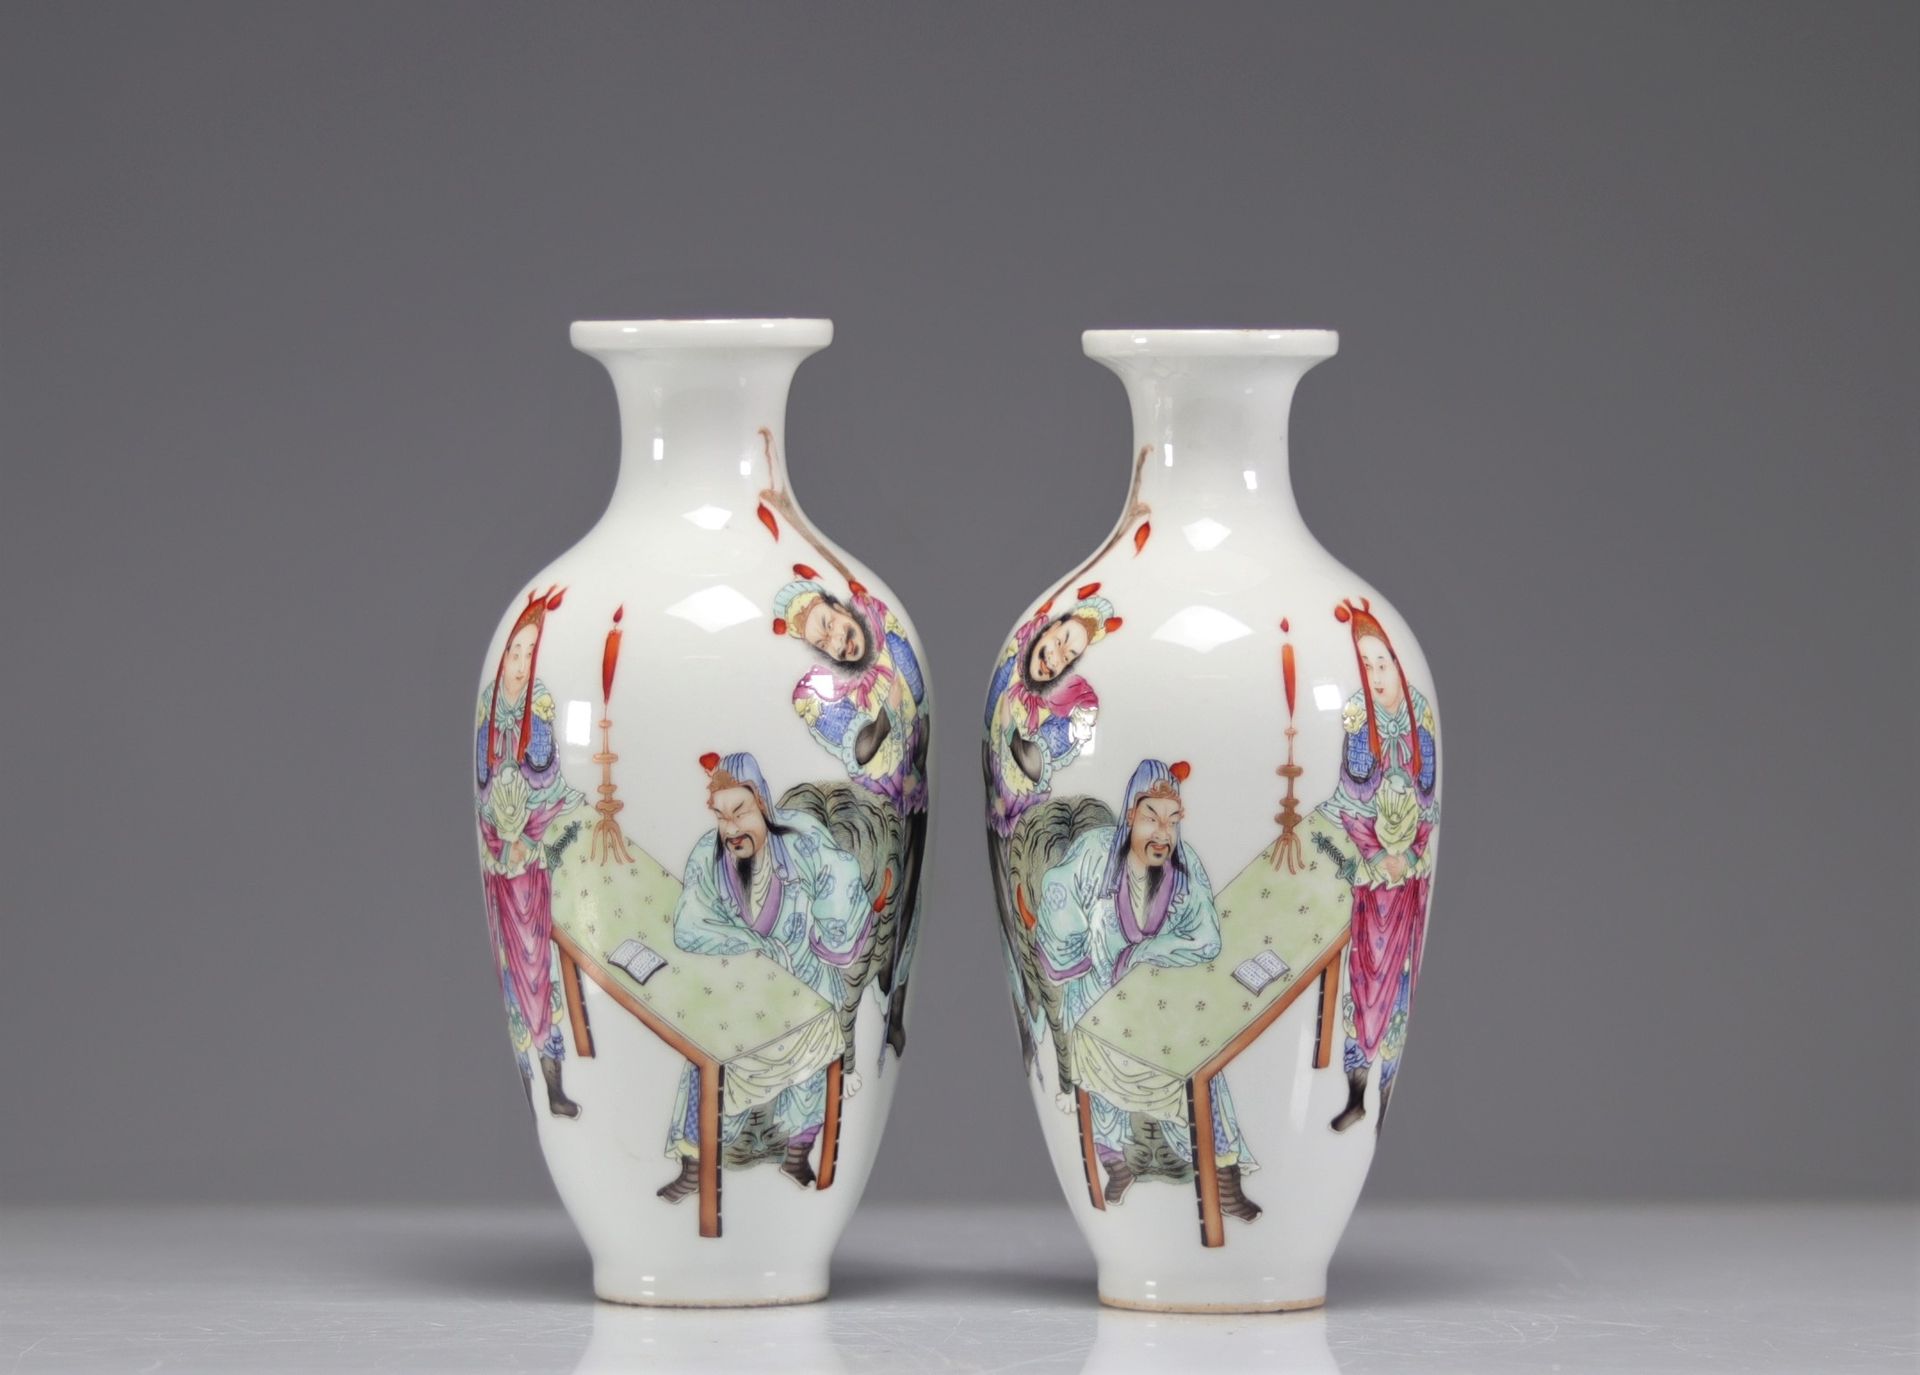 Null 一对民国时期的瓷质人物花瓶
重量：1.07公斤
地区：中国
尺寸：高225毫米x深100毫米
状况：初见时：状况良好